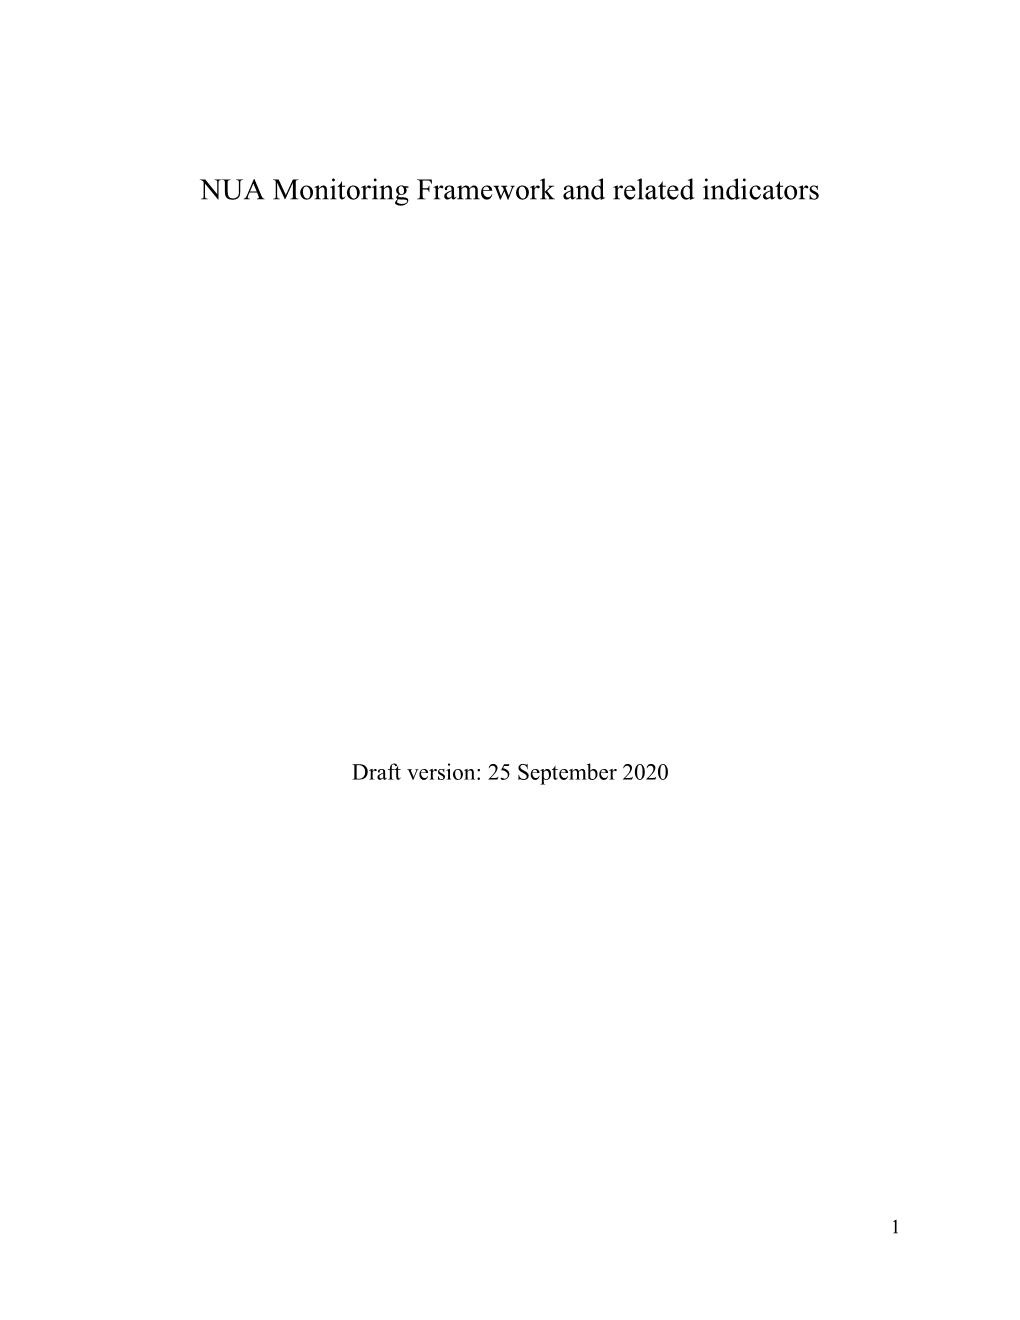 NUA Monitoring Framework and Related Indicators